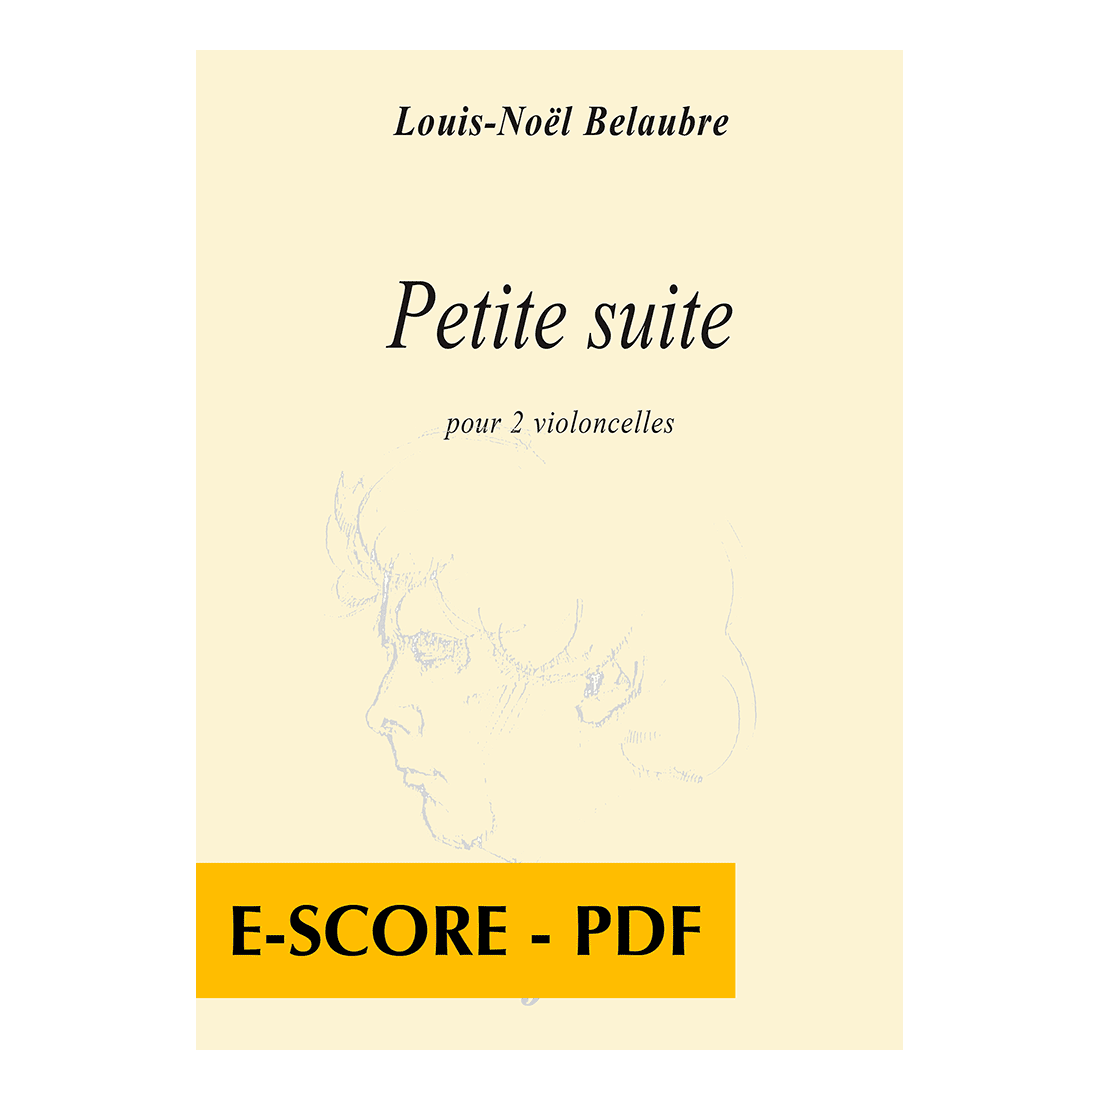 Petite suite for 2 cellos - E-score PDF